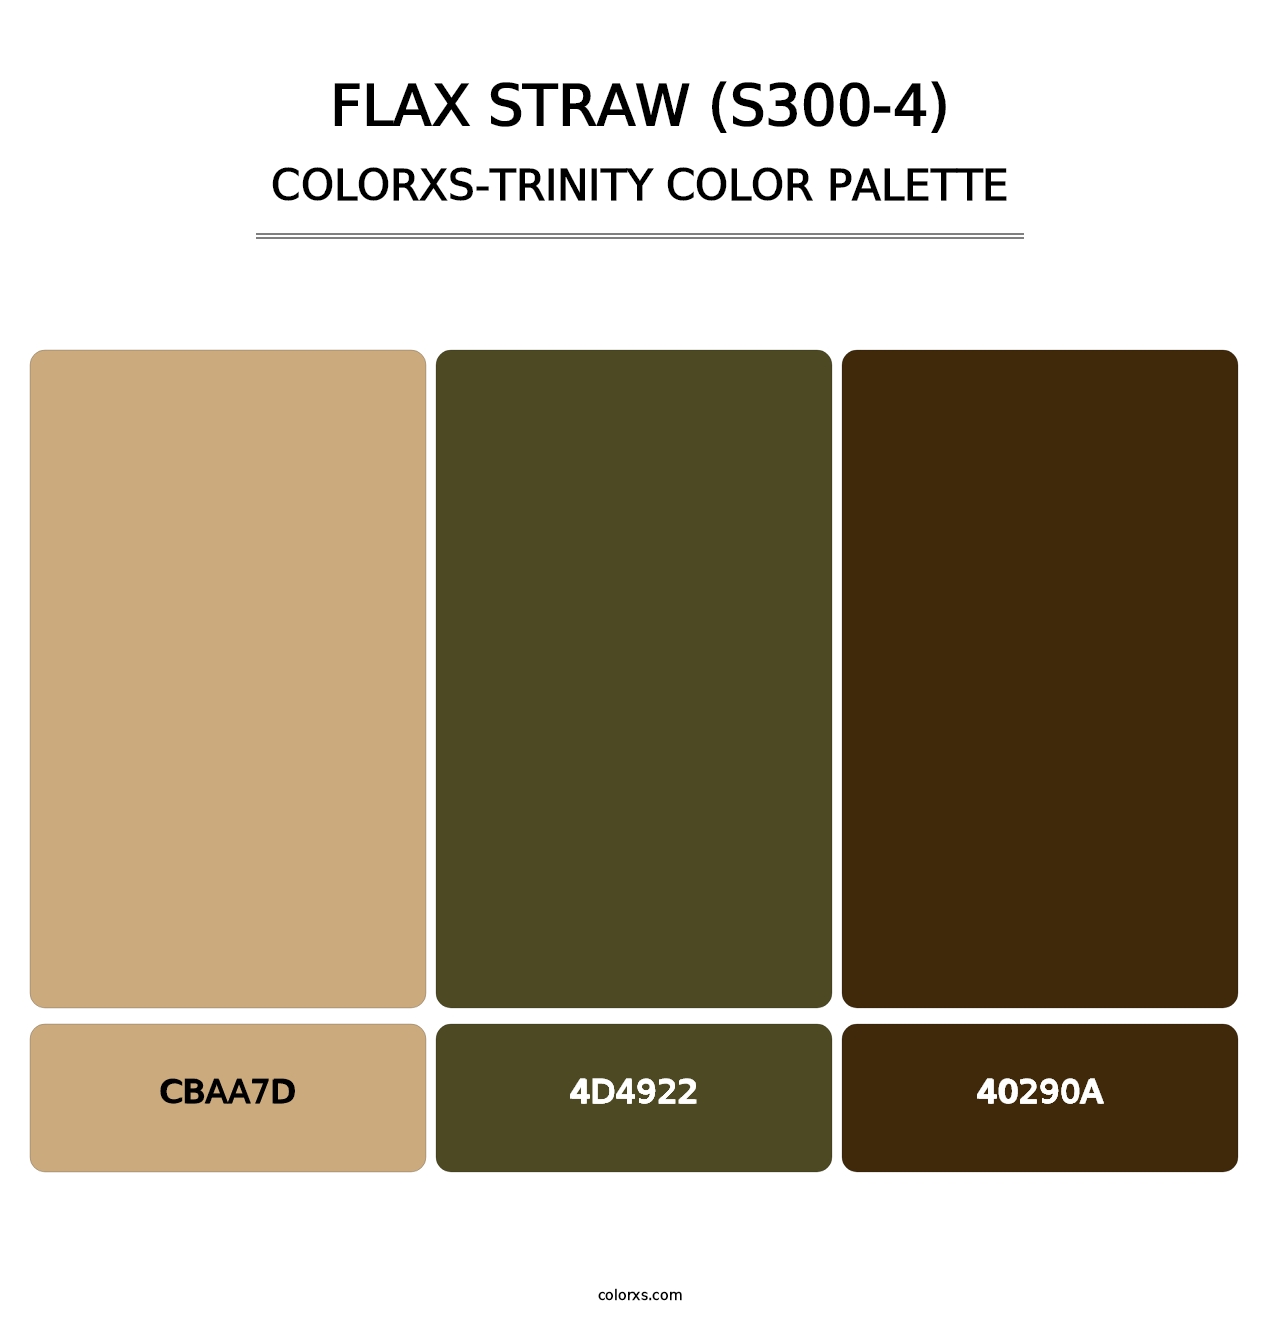 Flax Straw (S300-4) - Colorxs Trinity Palette